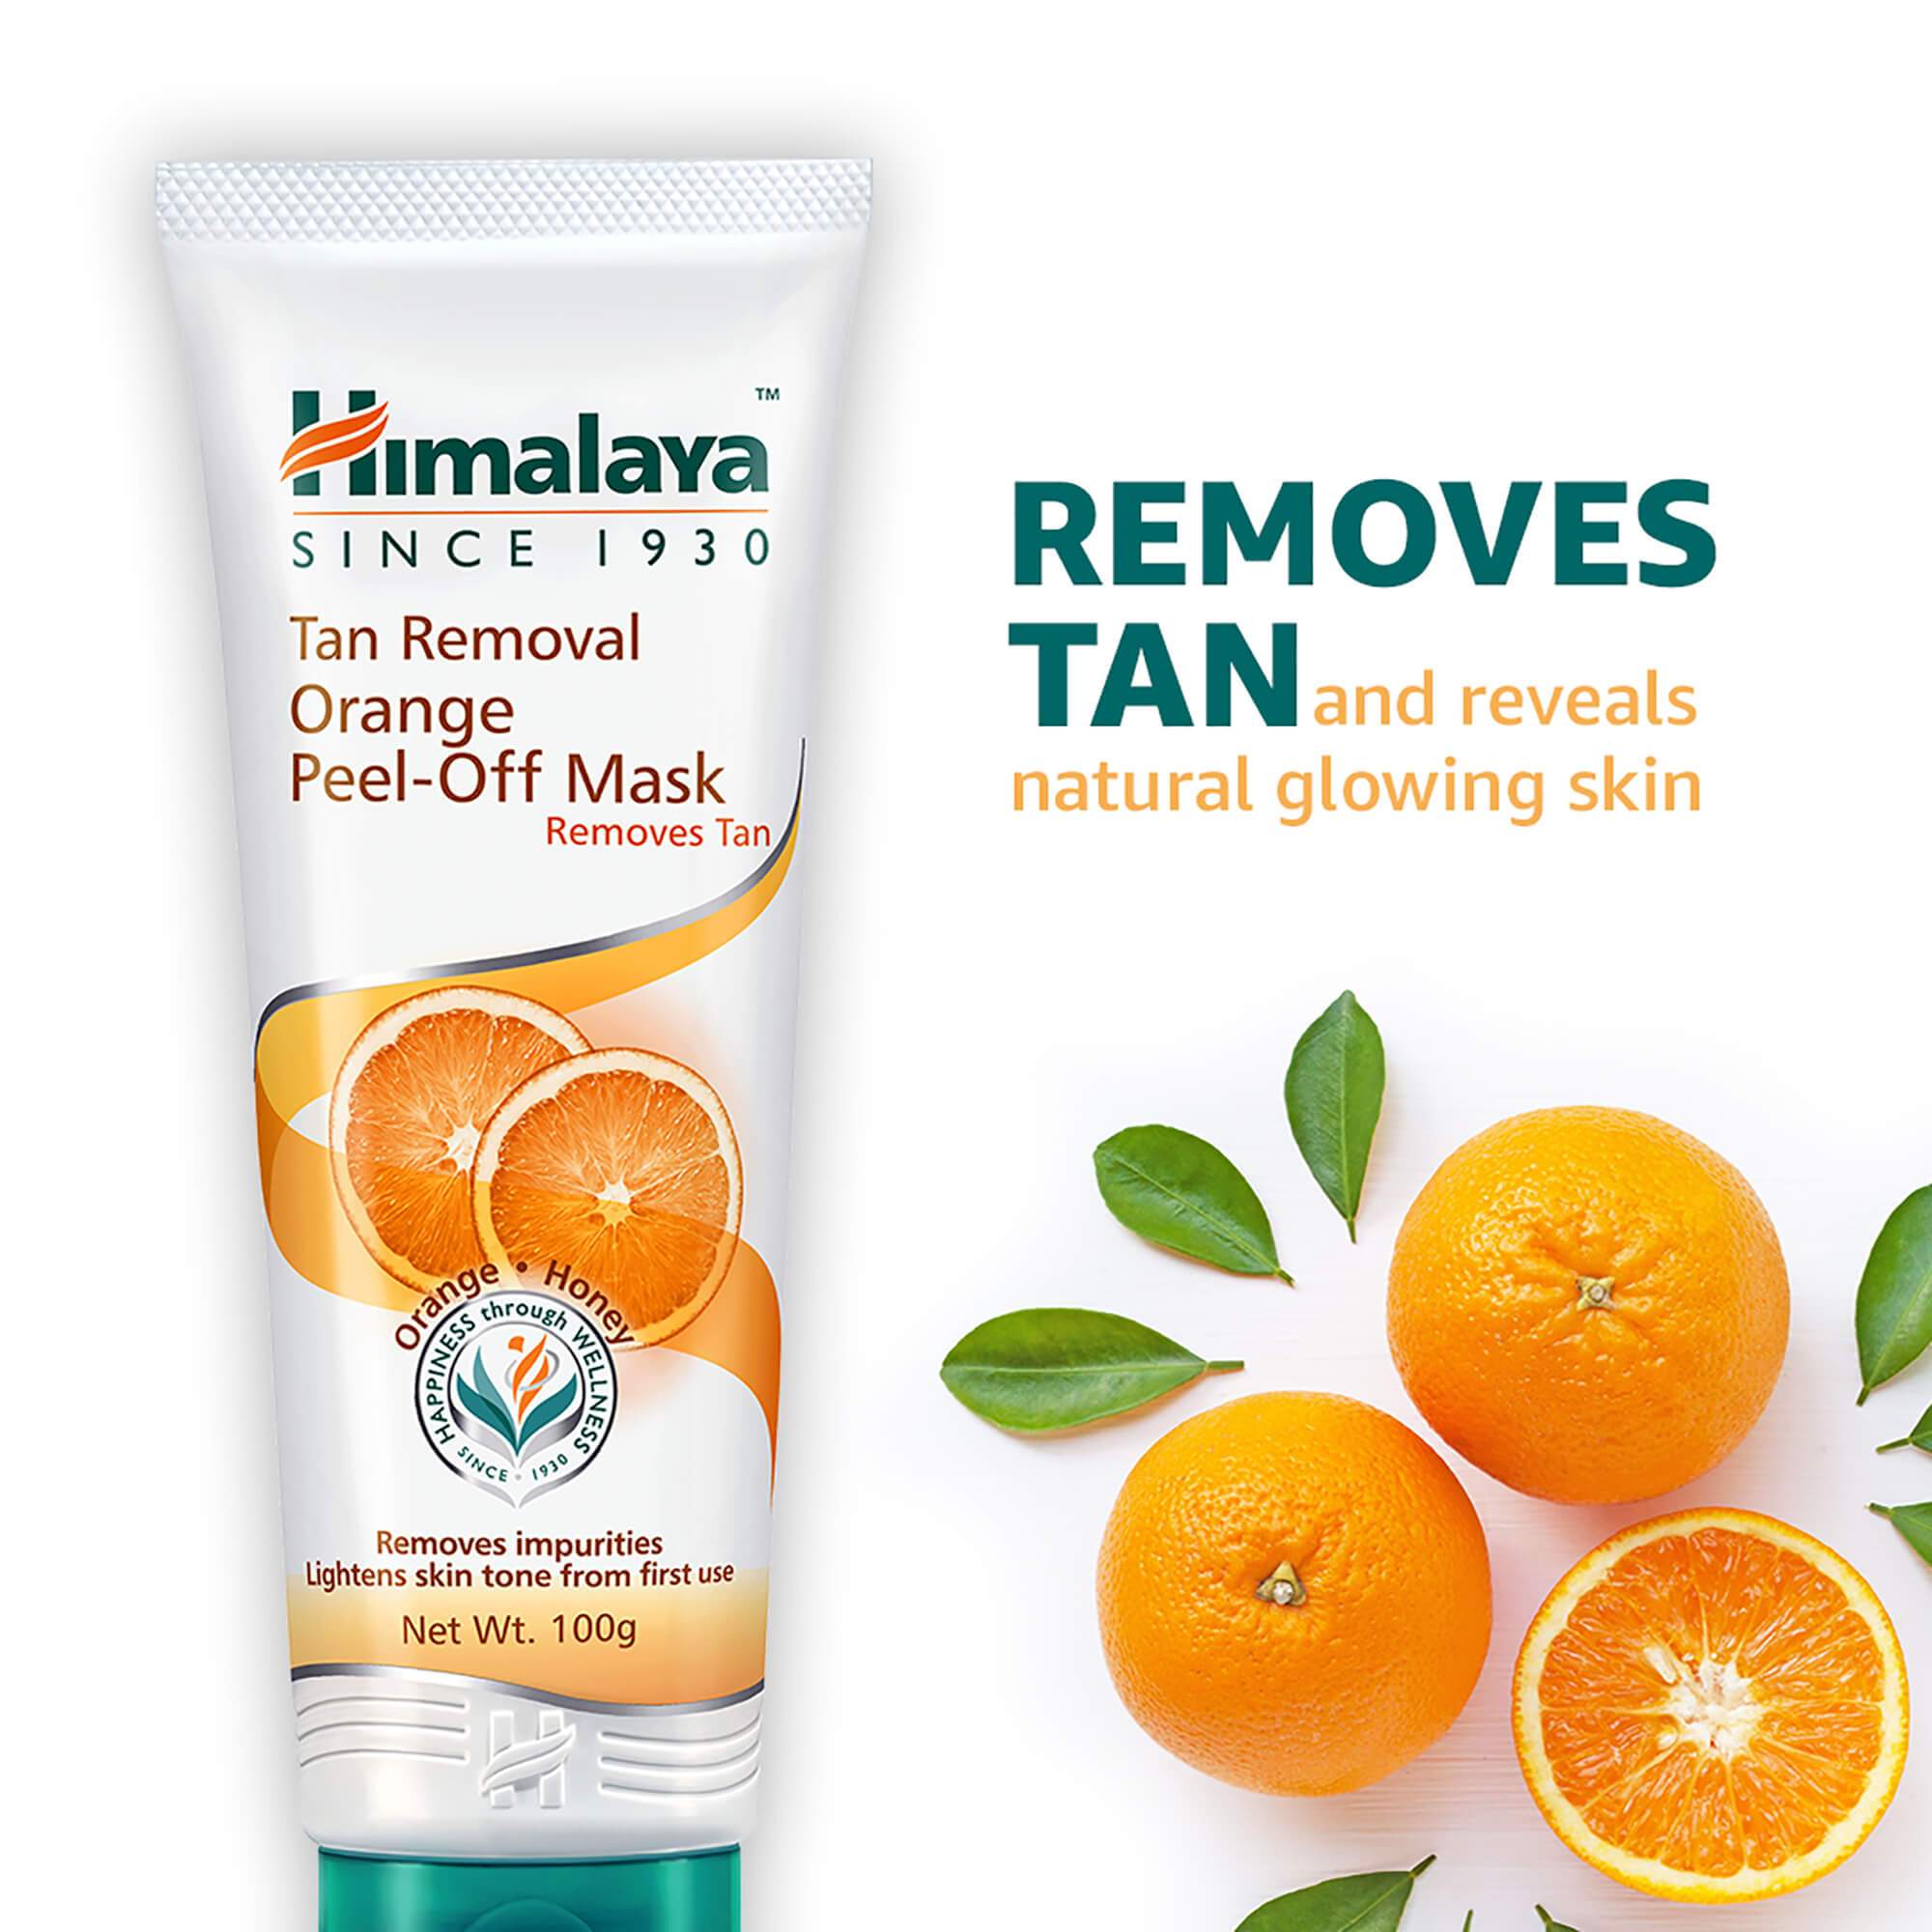 Tan Removal Orange Peel-Off Mask